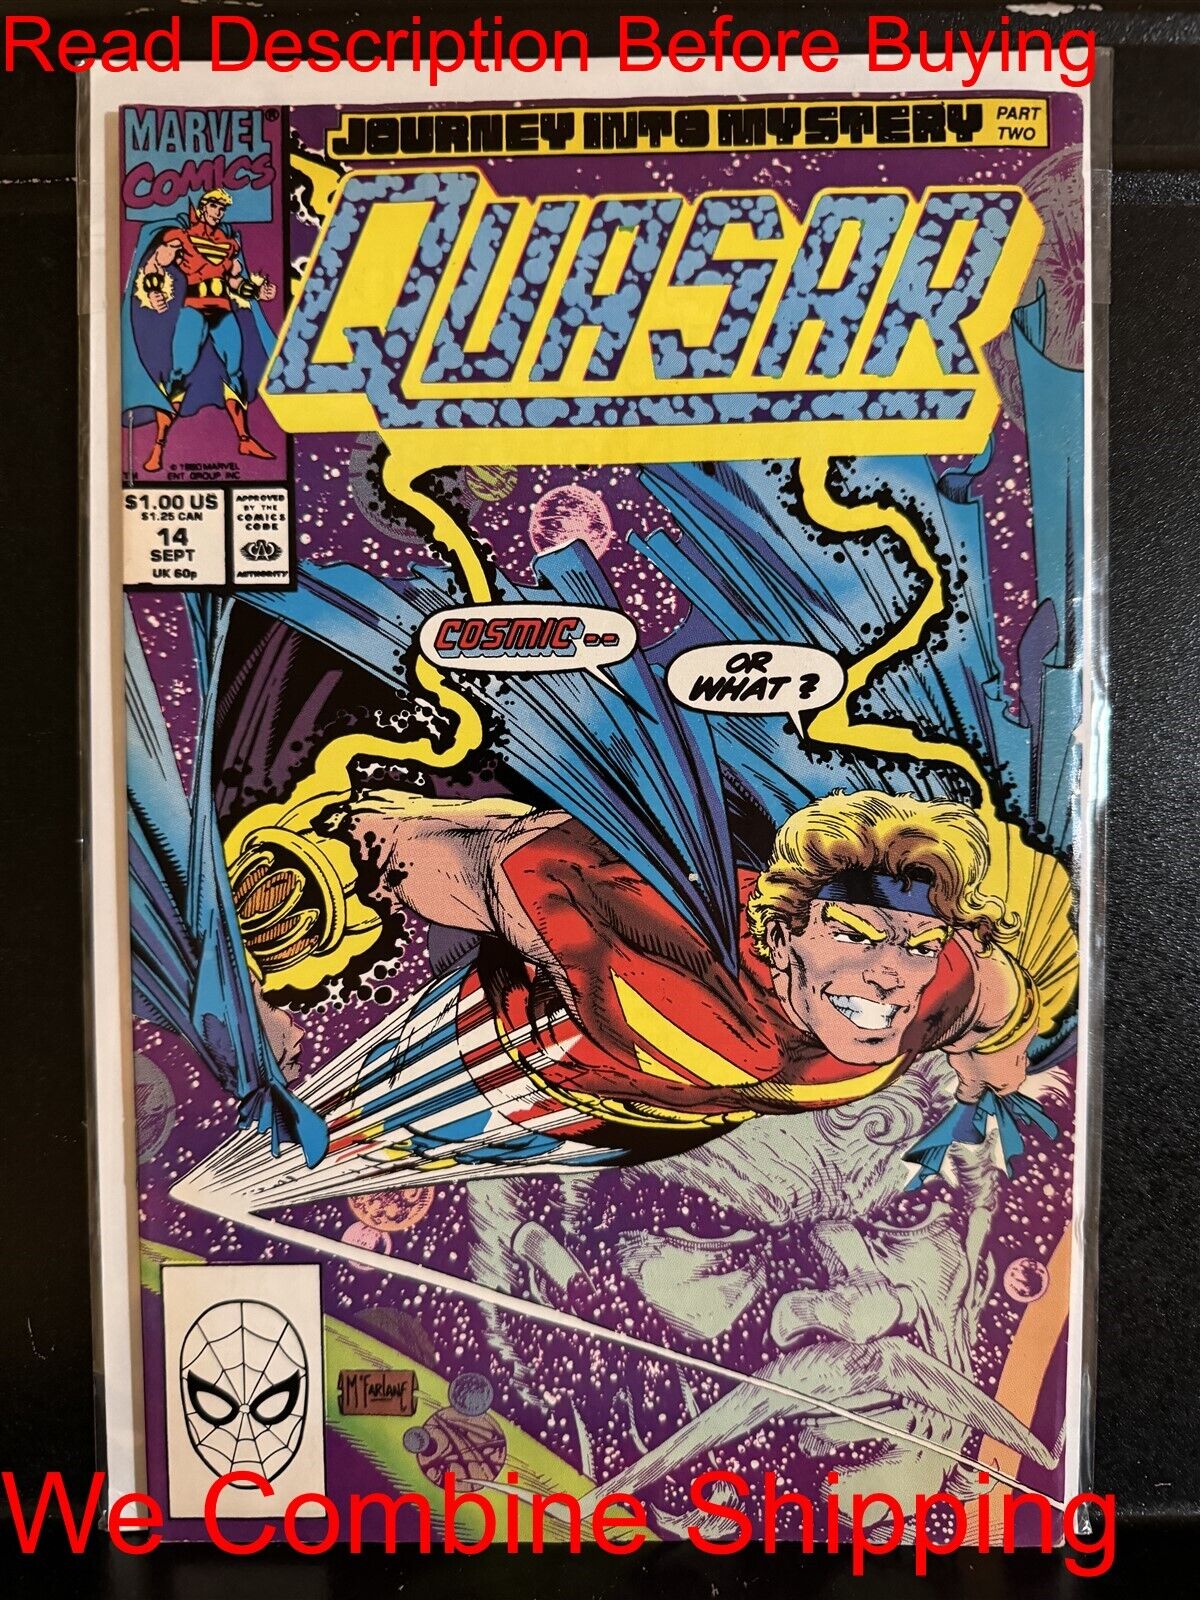 BARGAIN BOOKS ($5 MIN PURCHASE) Quasar #14 (1990 Marvel) Free Combine Shipping